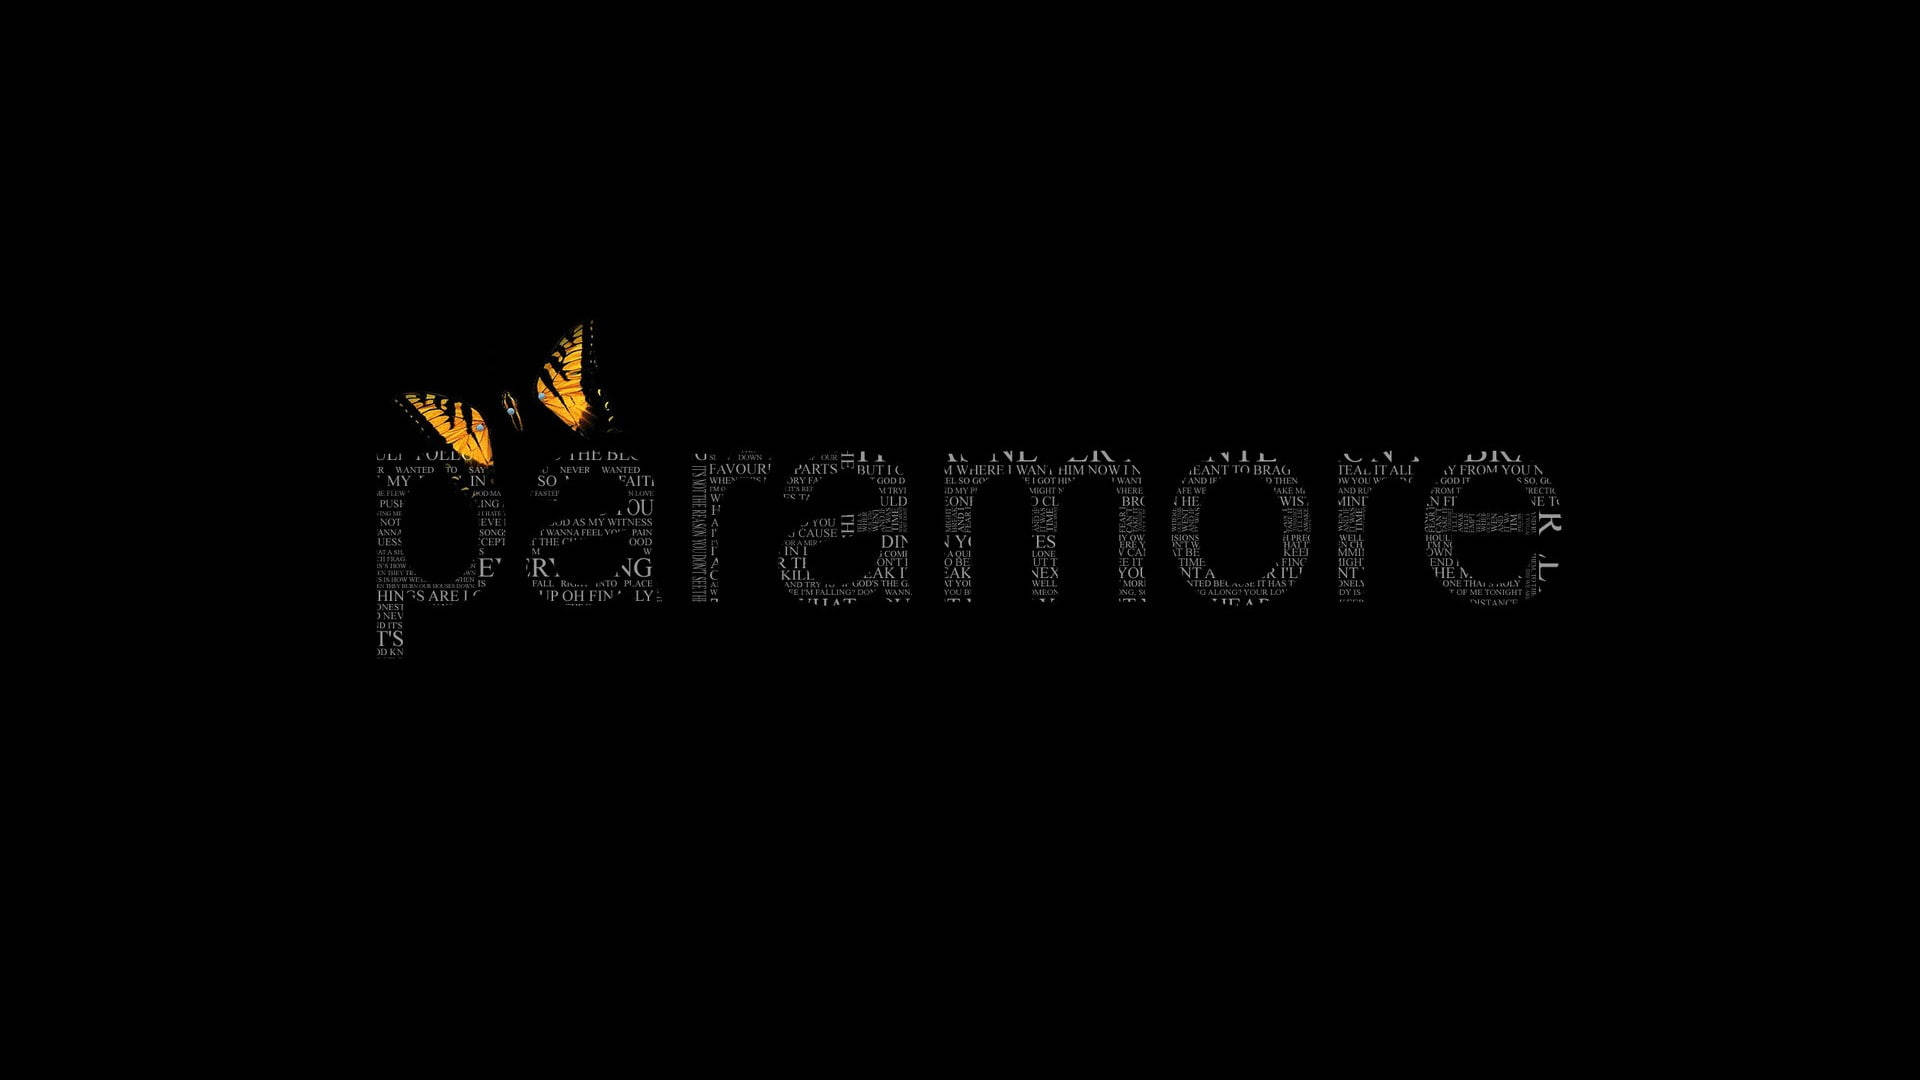 Paramore Brand New Eyes Wallpaper